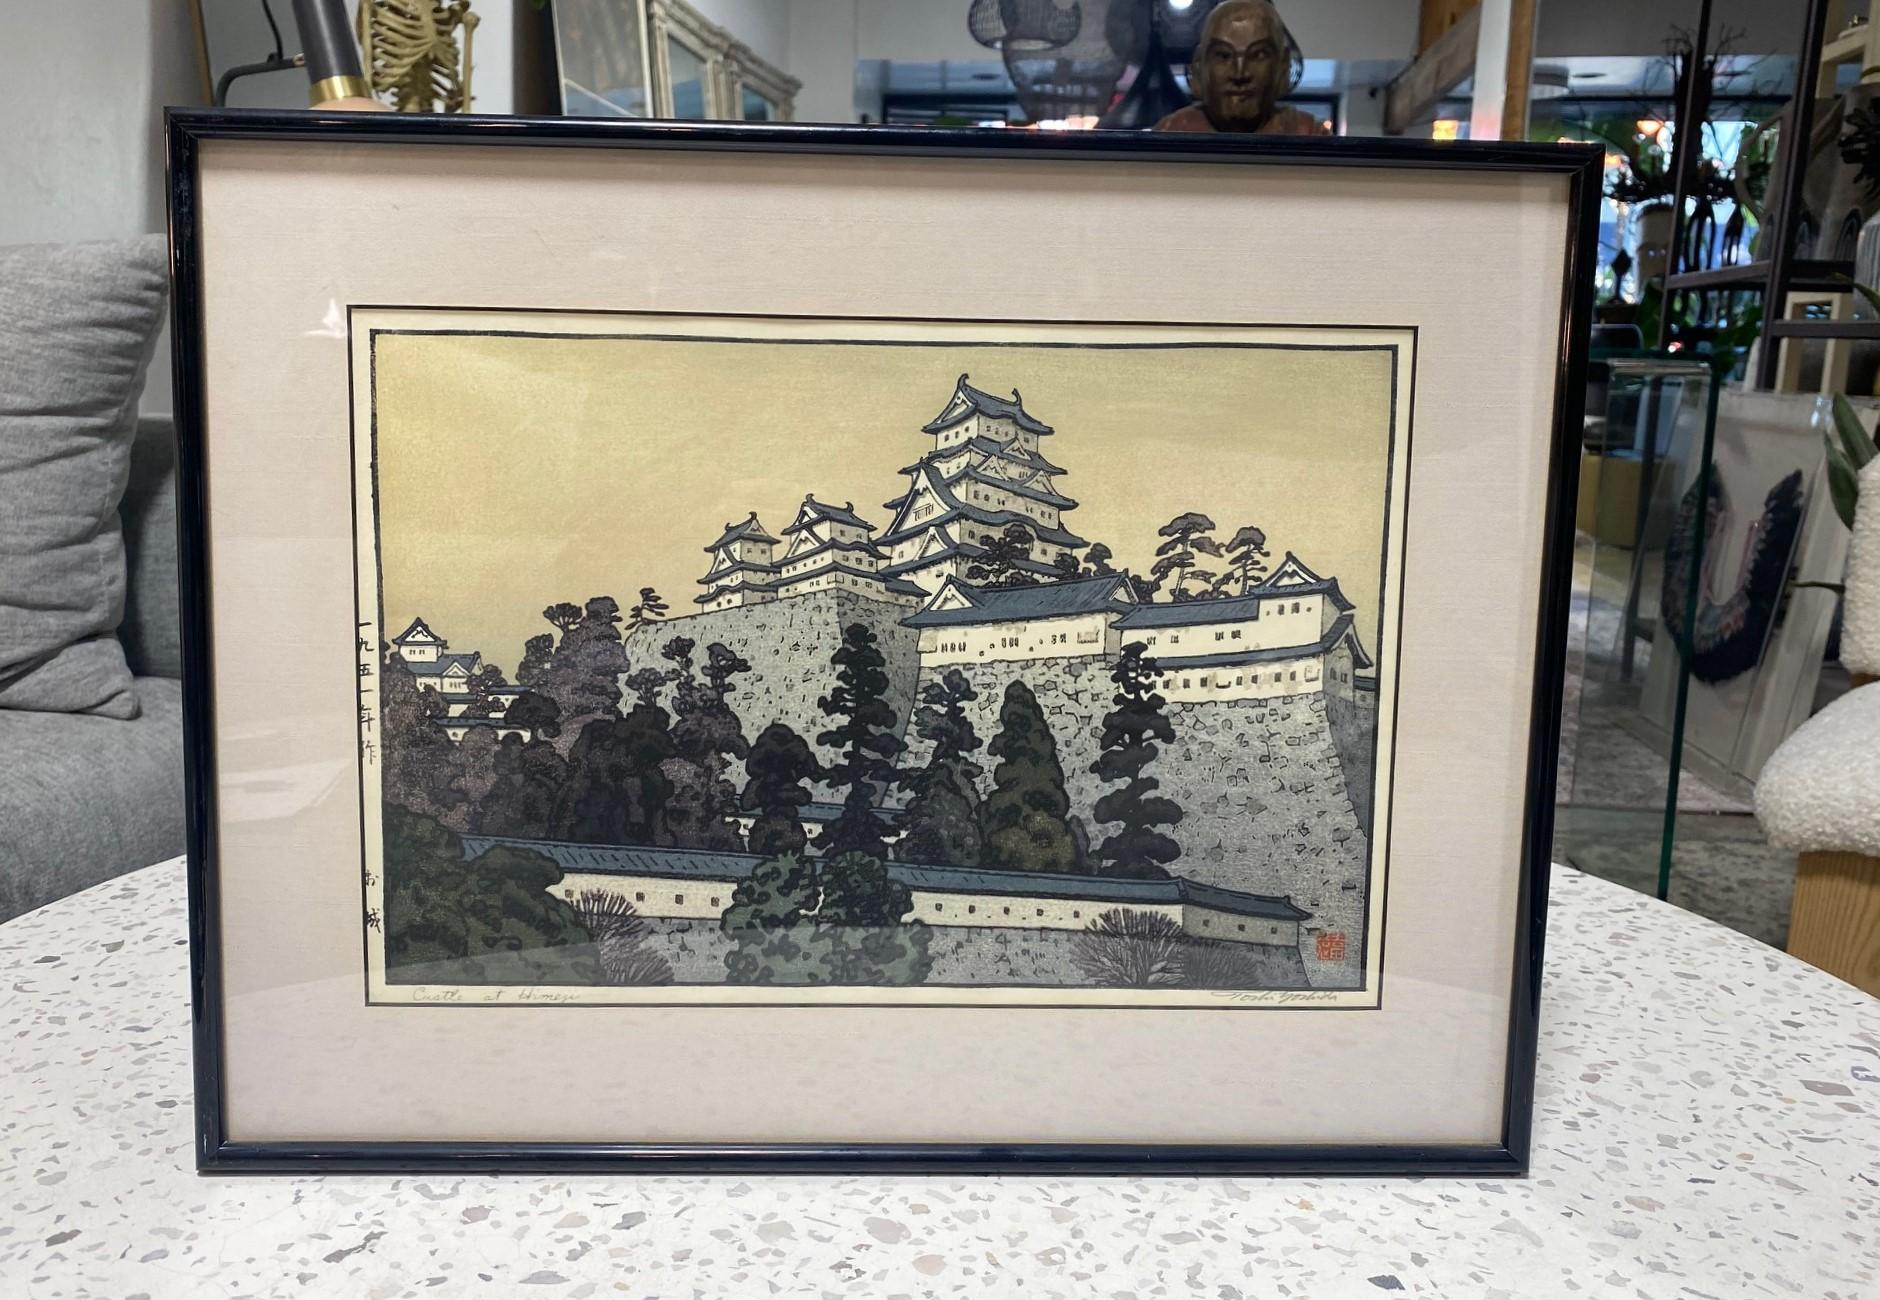 A truly wonderful, original woodblock print by Japanese Sosaku-Hanga artist Toshi Yoshida, son of famed master printmaker/artist Hiroshi Yoshida.  This work is titled 